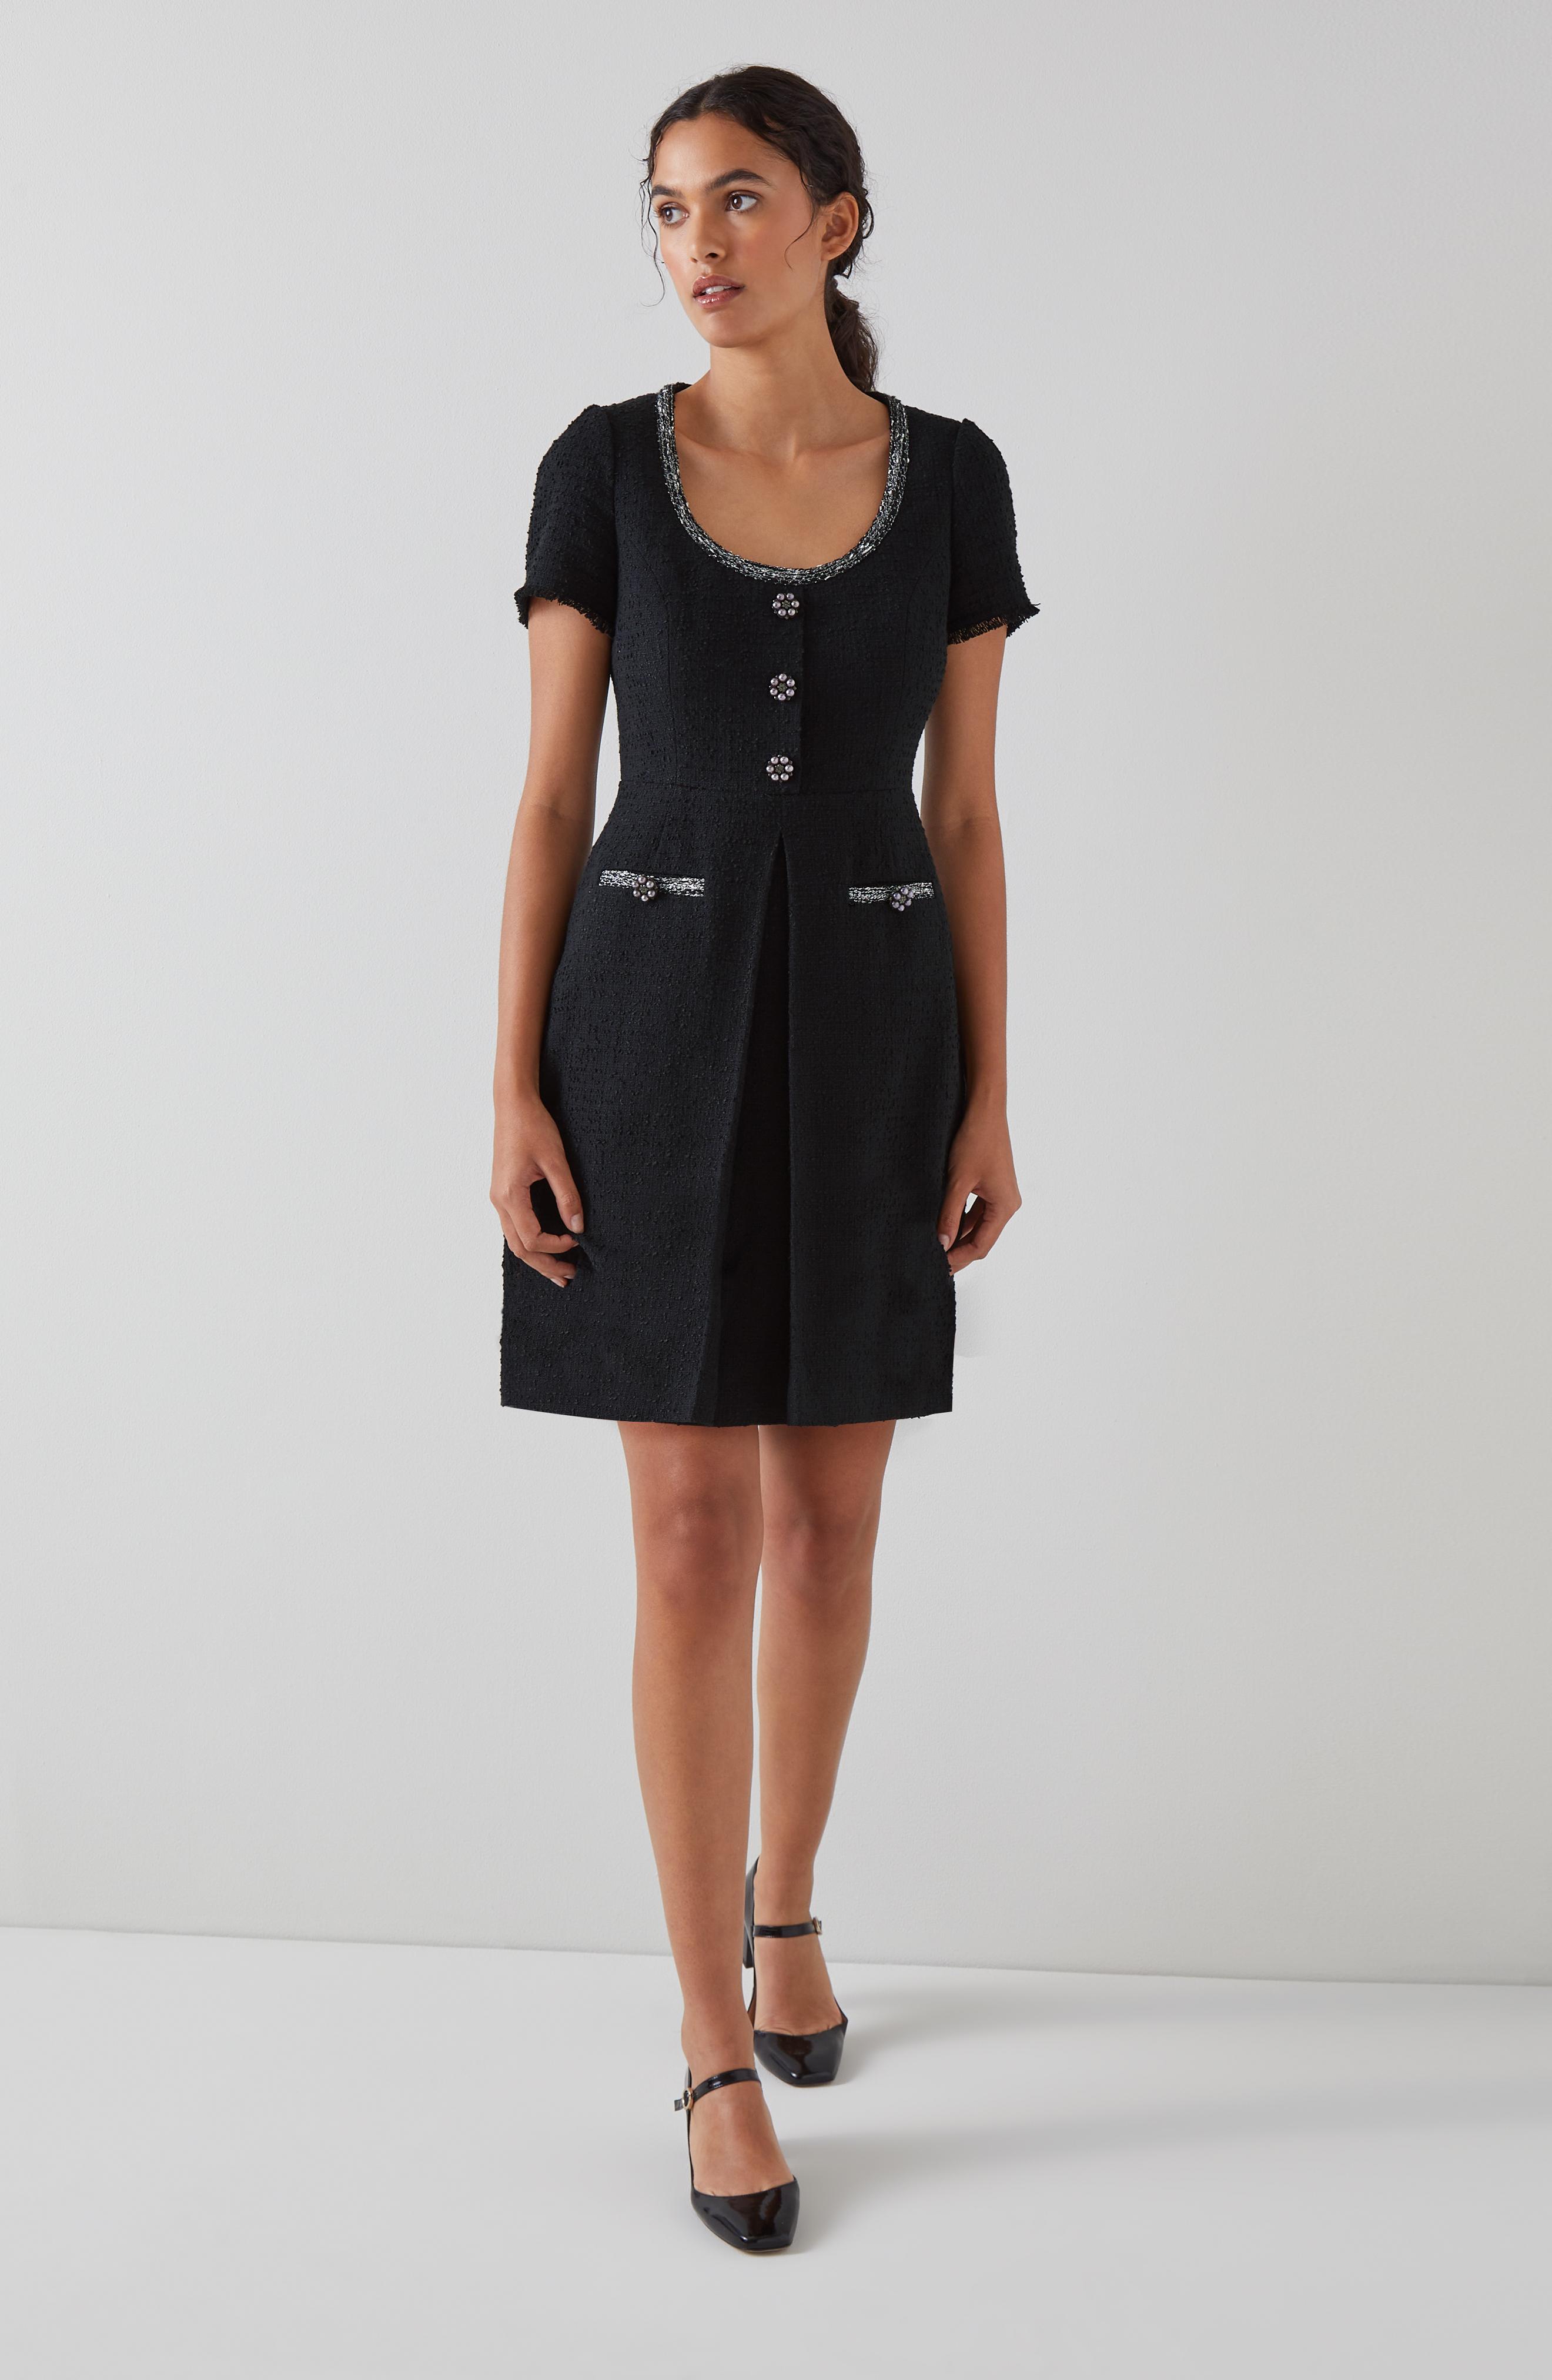 L.K.Bennett Lara Black Italian Recycled Cotton Tweed Dress, Black